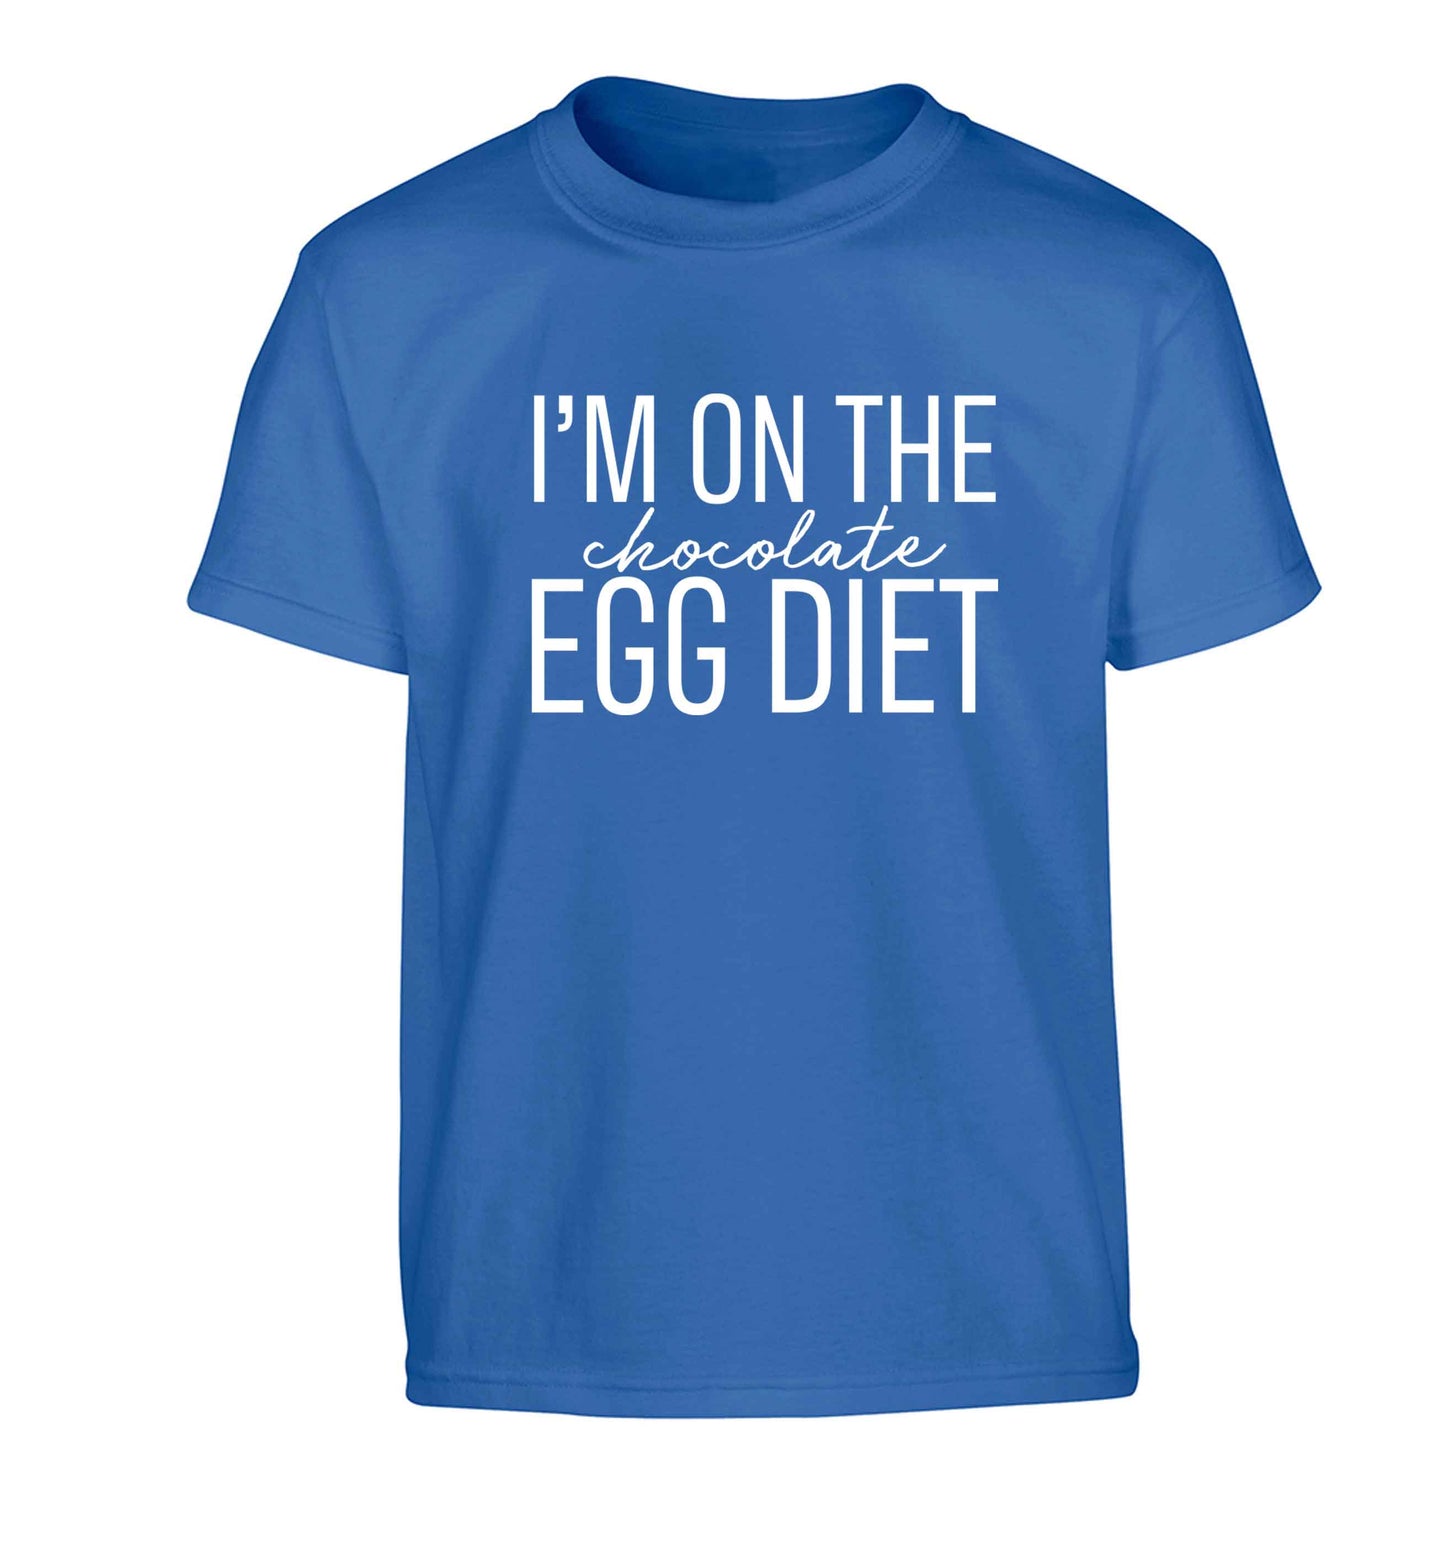 I'm on the chocolate egg diet Children's blue Tshirt 12-13 Years